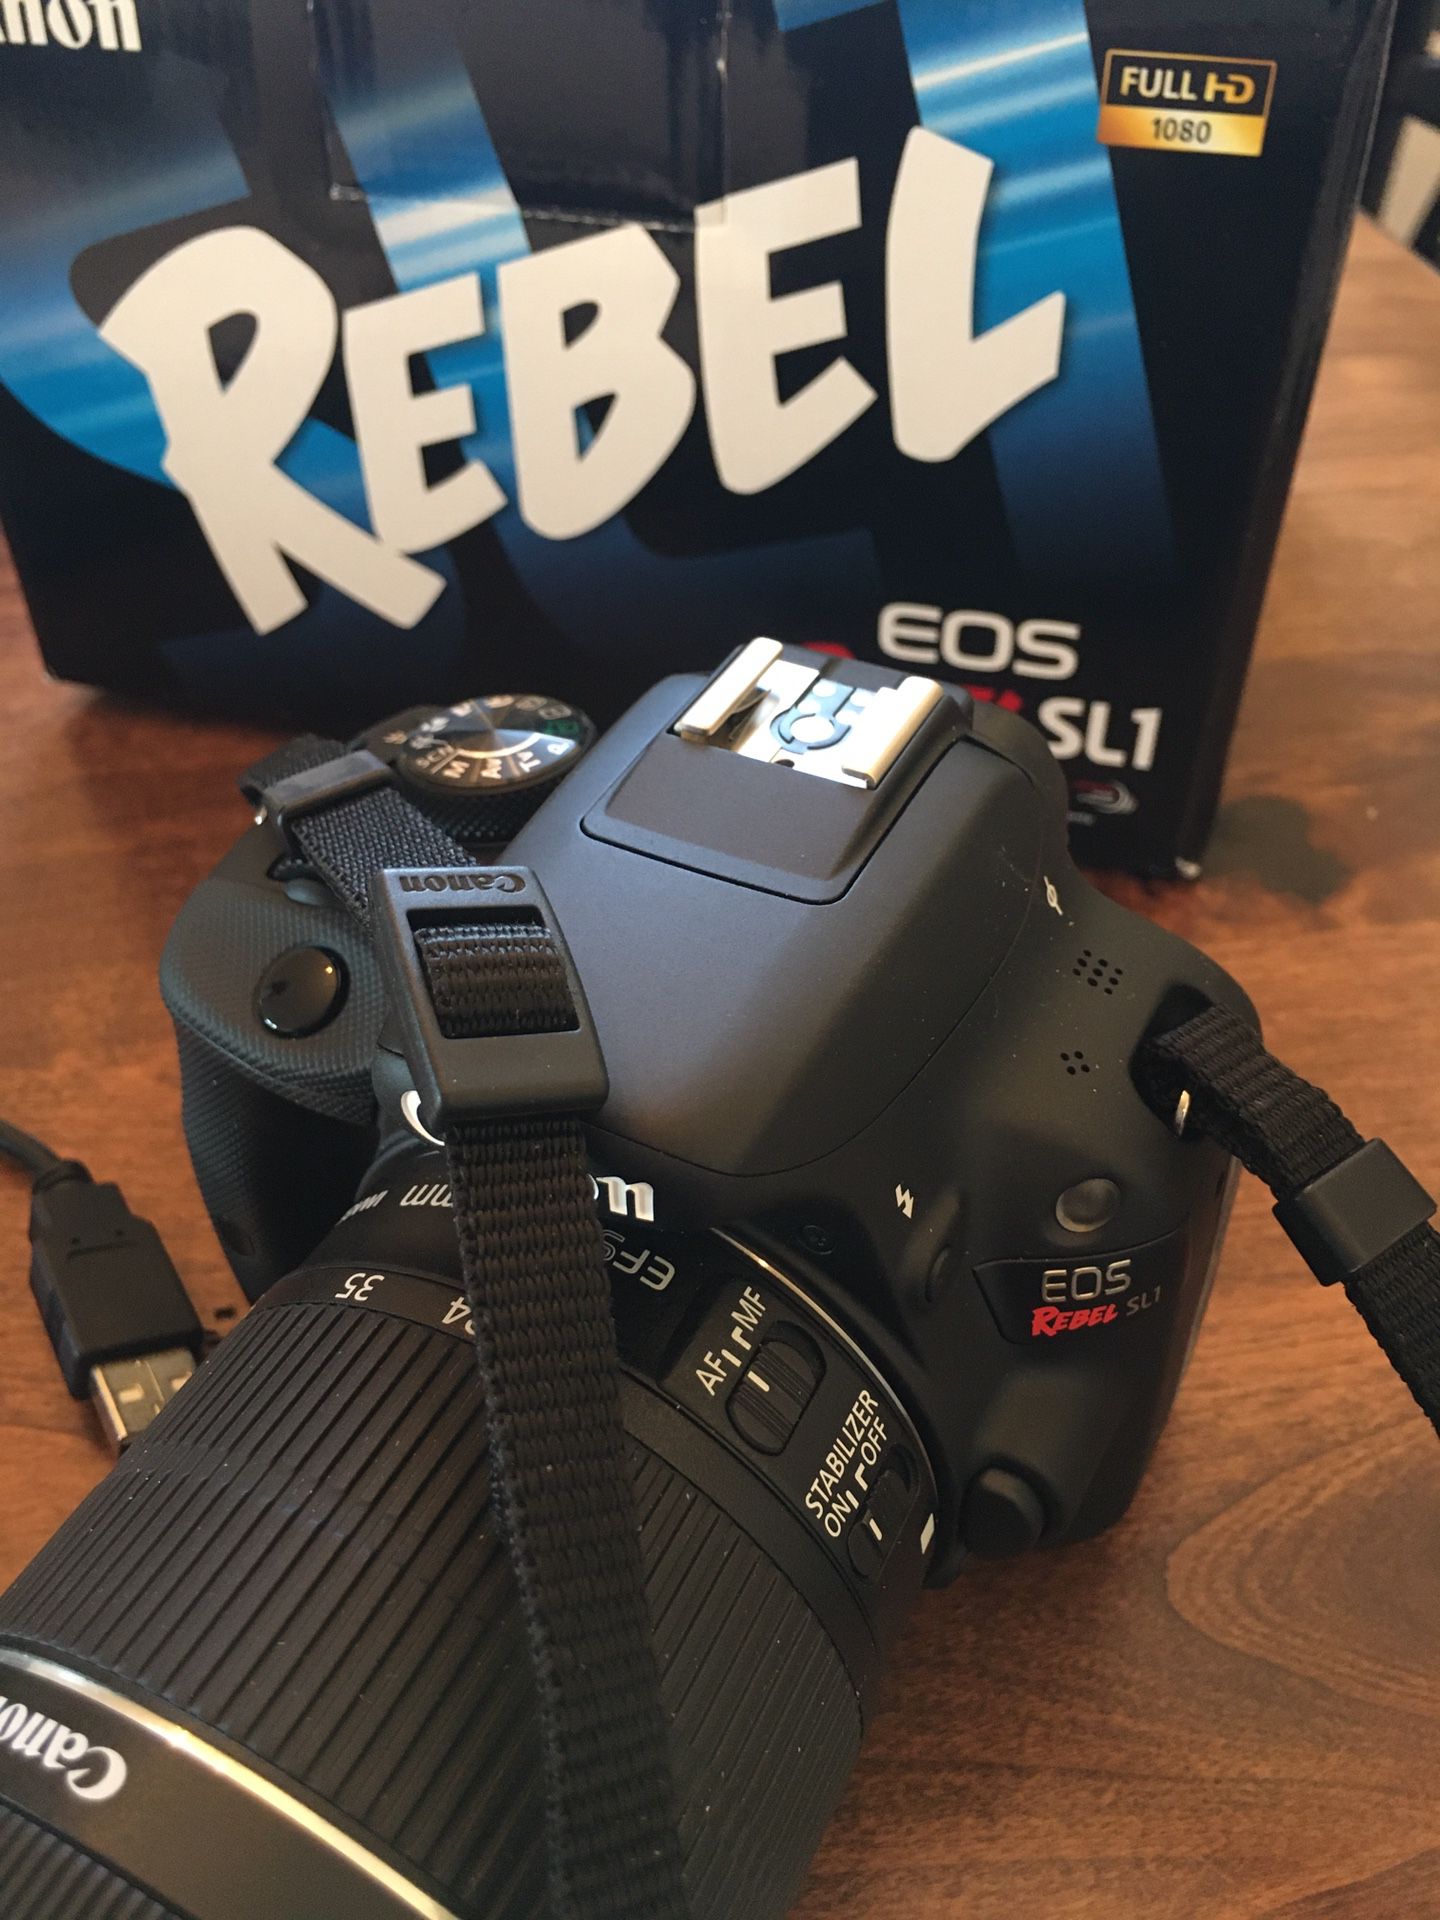 Canon EOS Rebel, SL 1, Tripod, Cleaning Kit, etc...